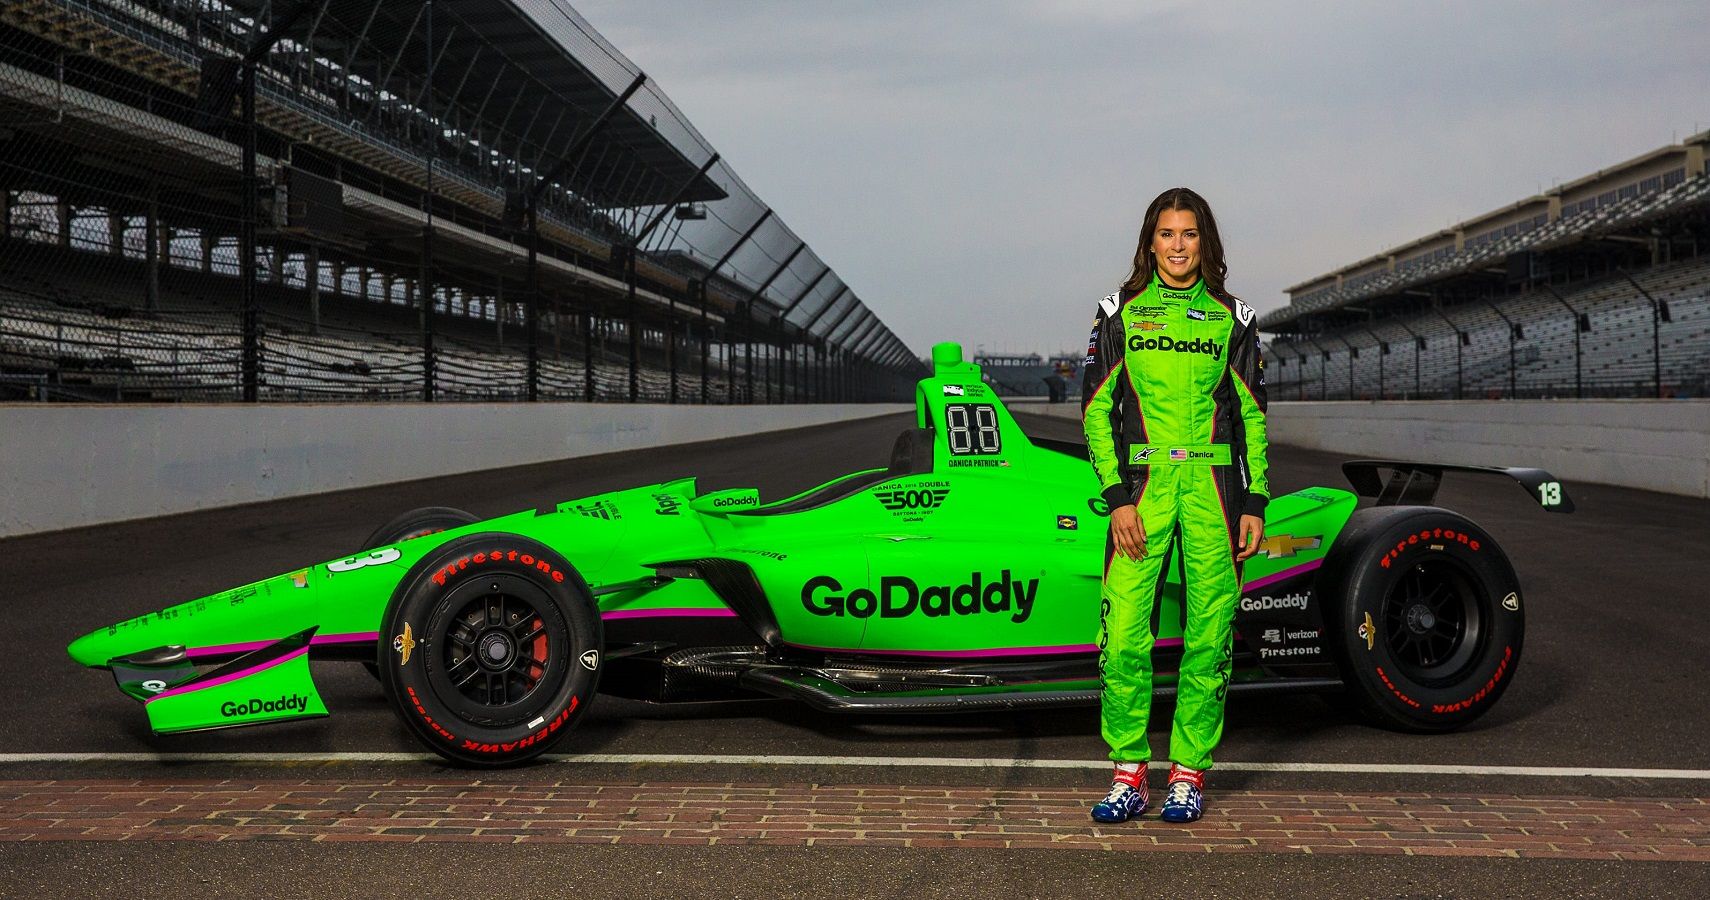 Danica Patrick posing with her racing car